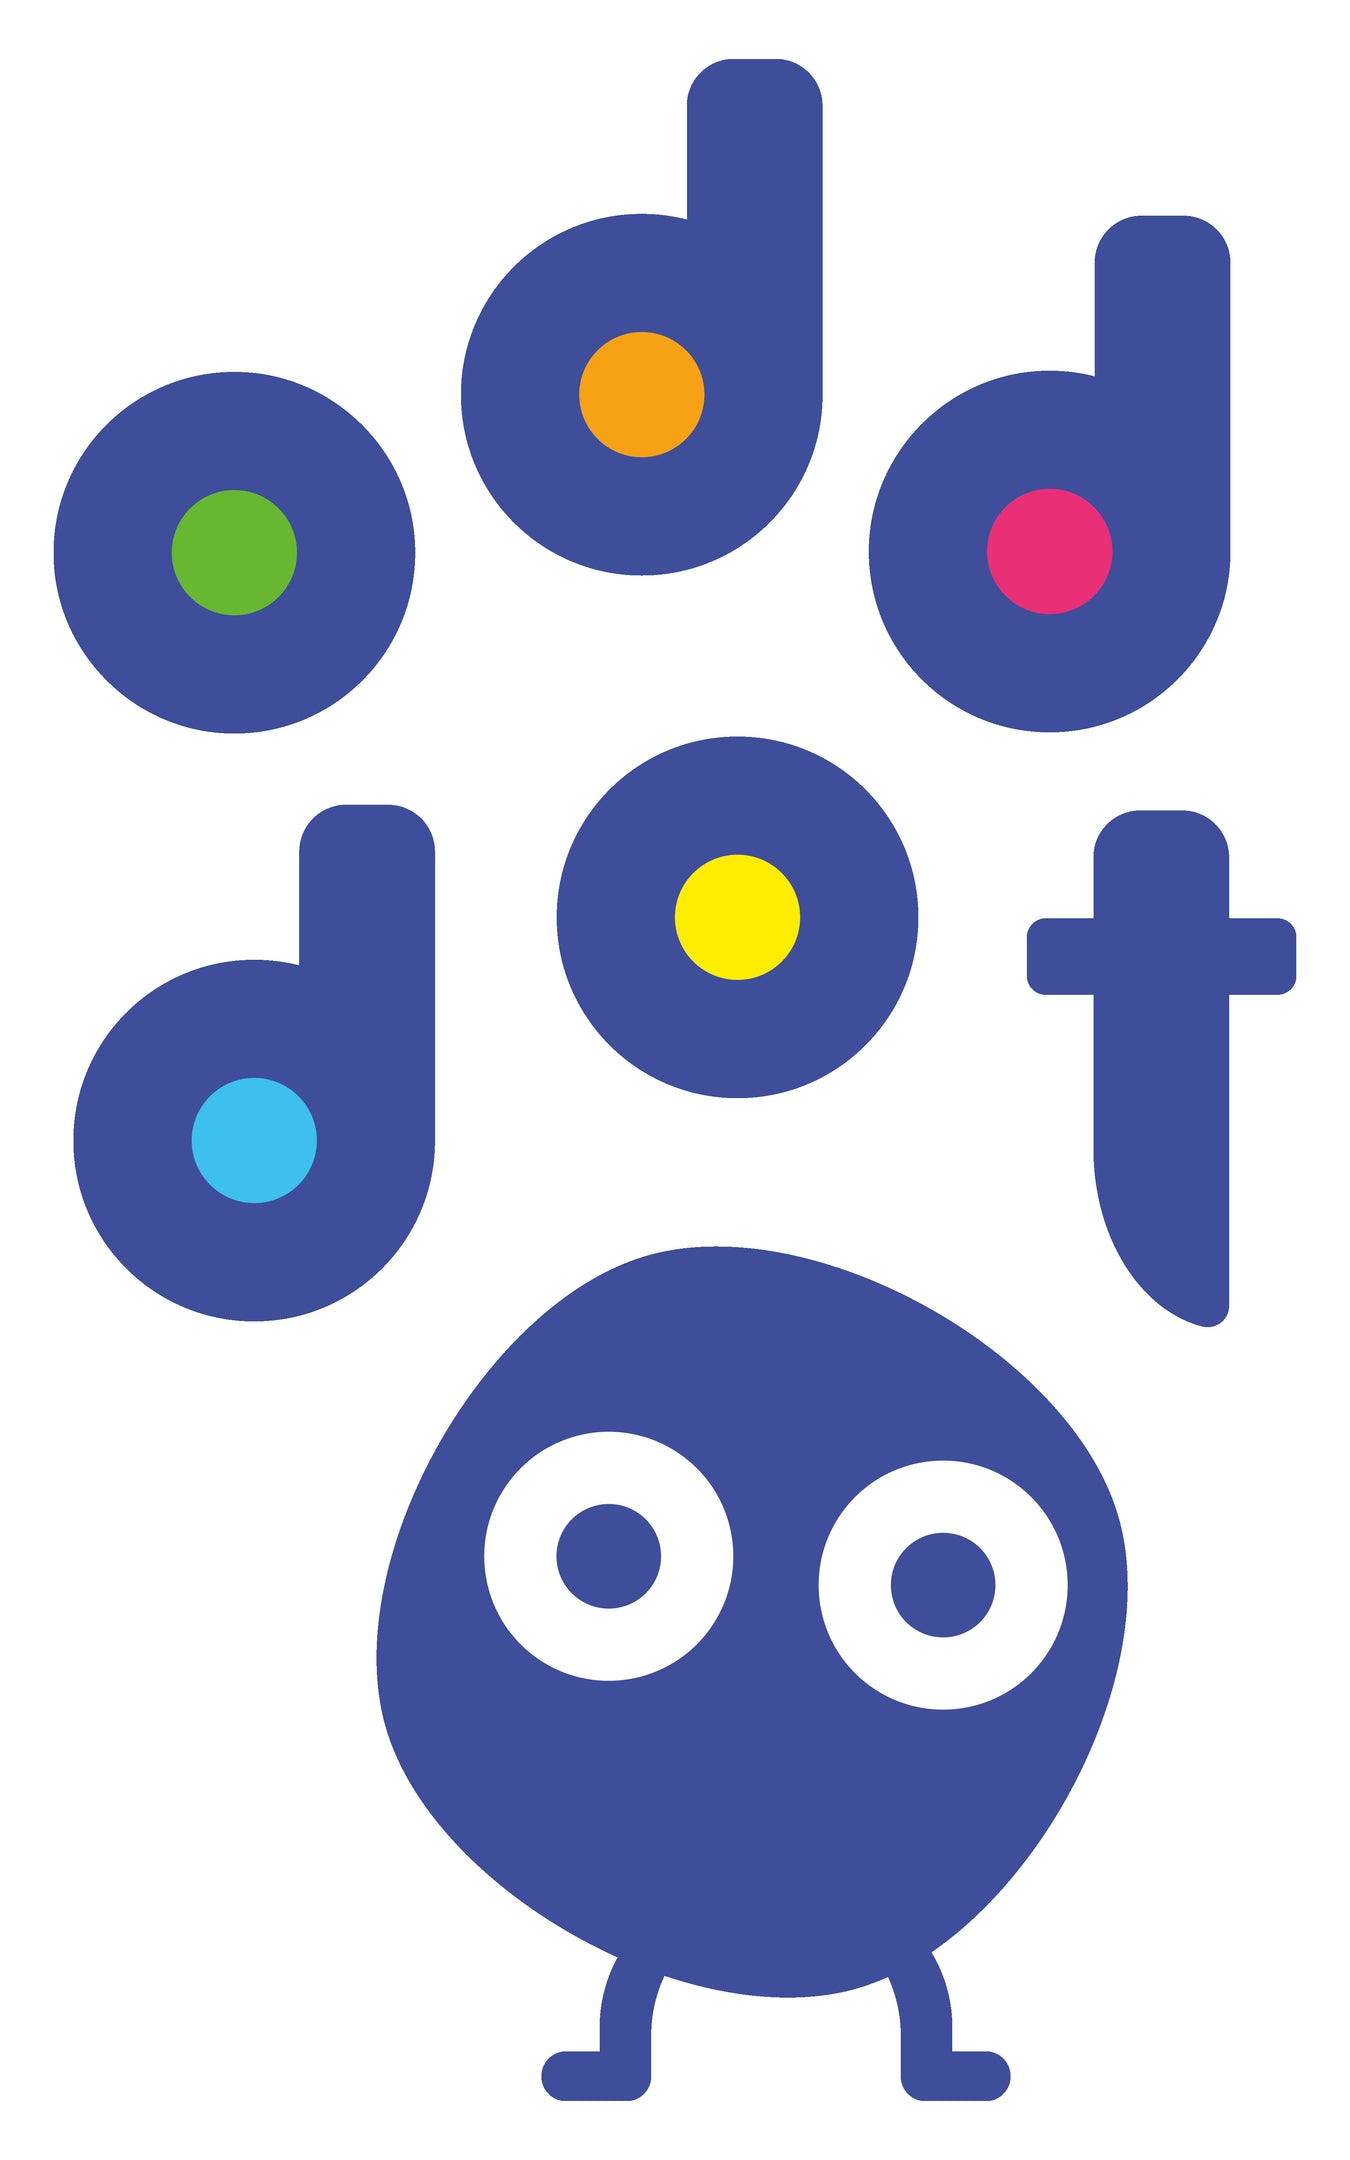 Odd Dot